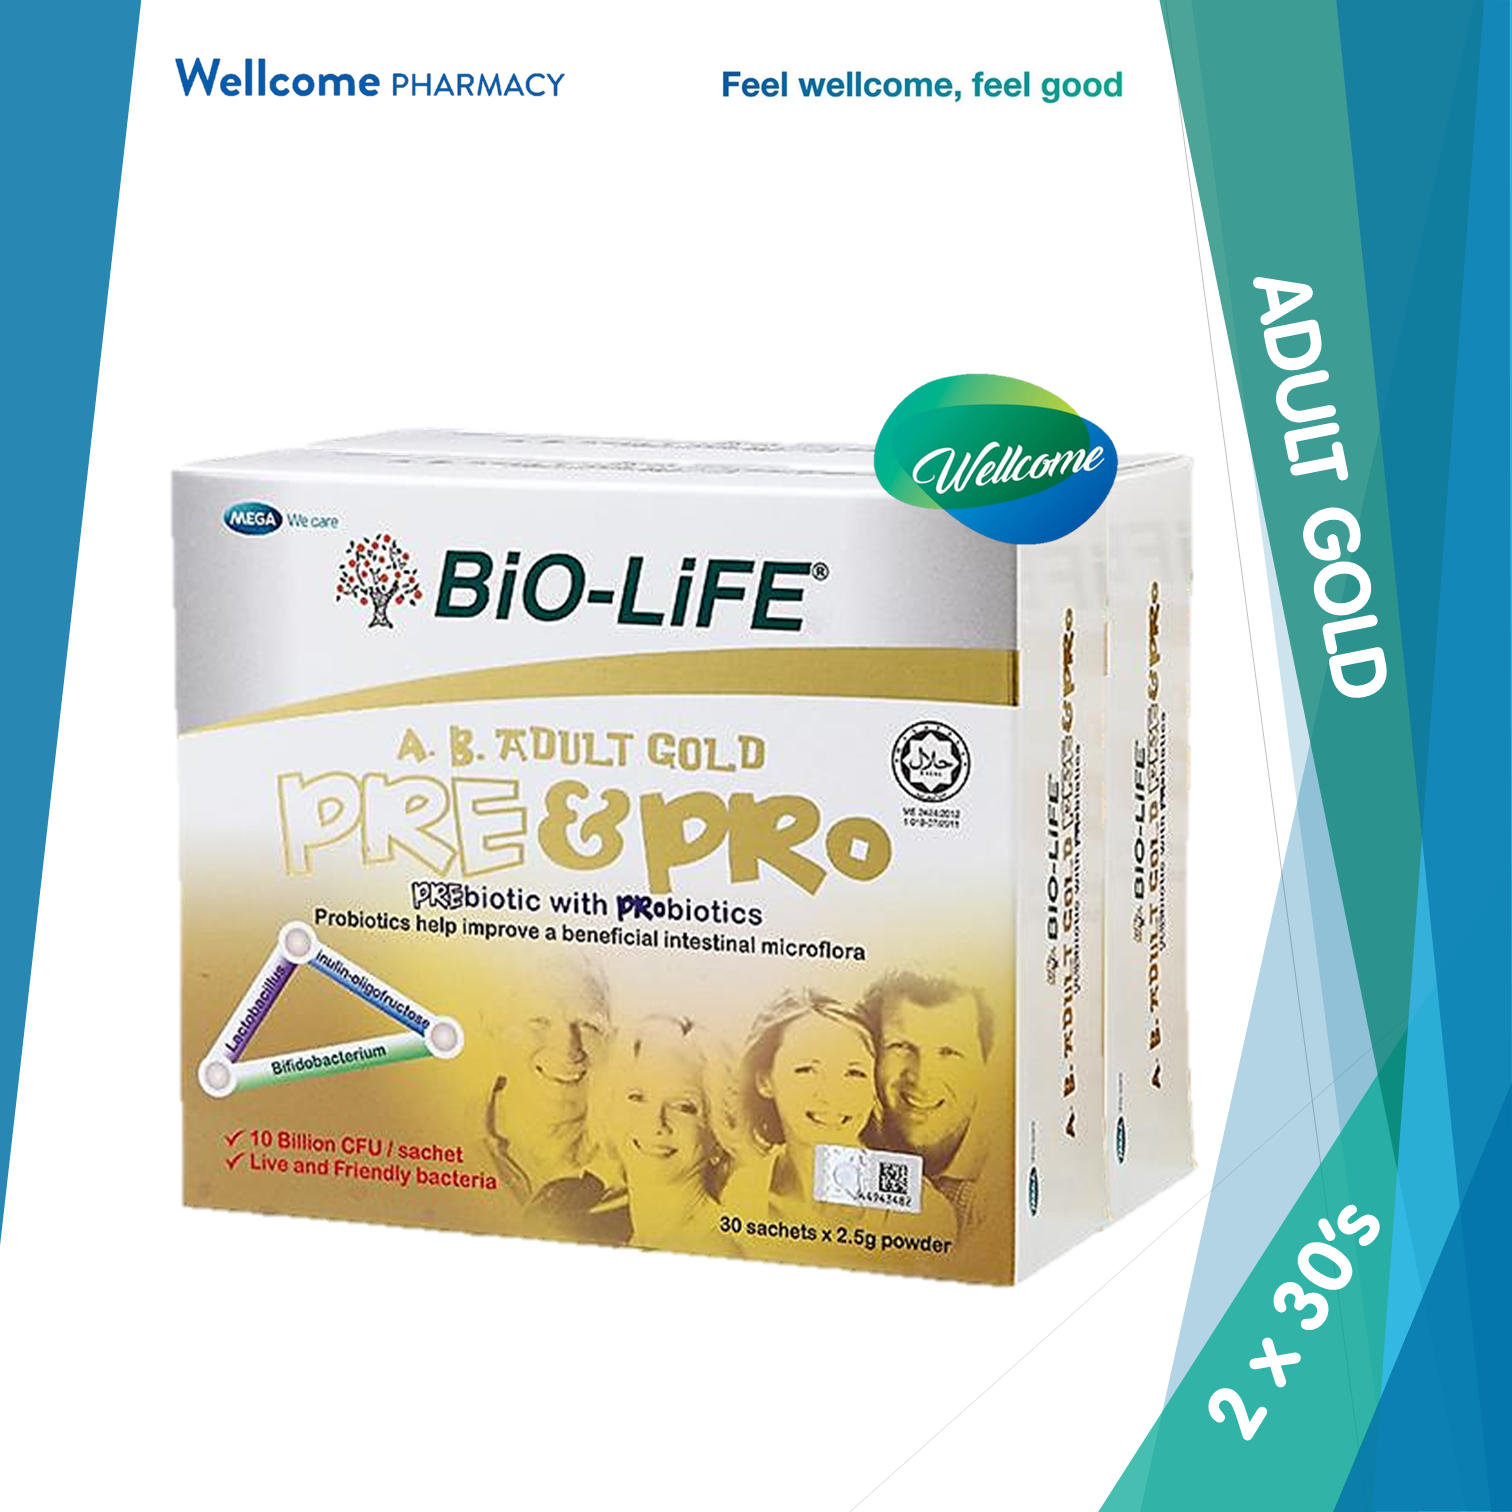 Bio-Life A.B. Adult Gold Pre & Pro Powder - 2 x 30s.png